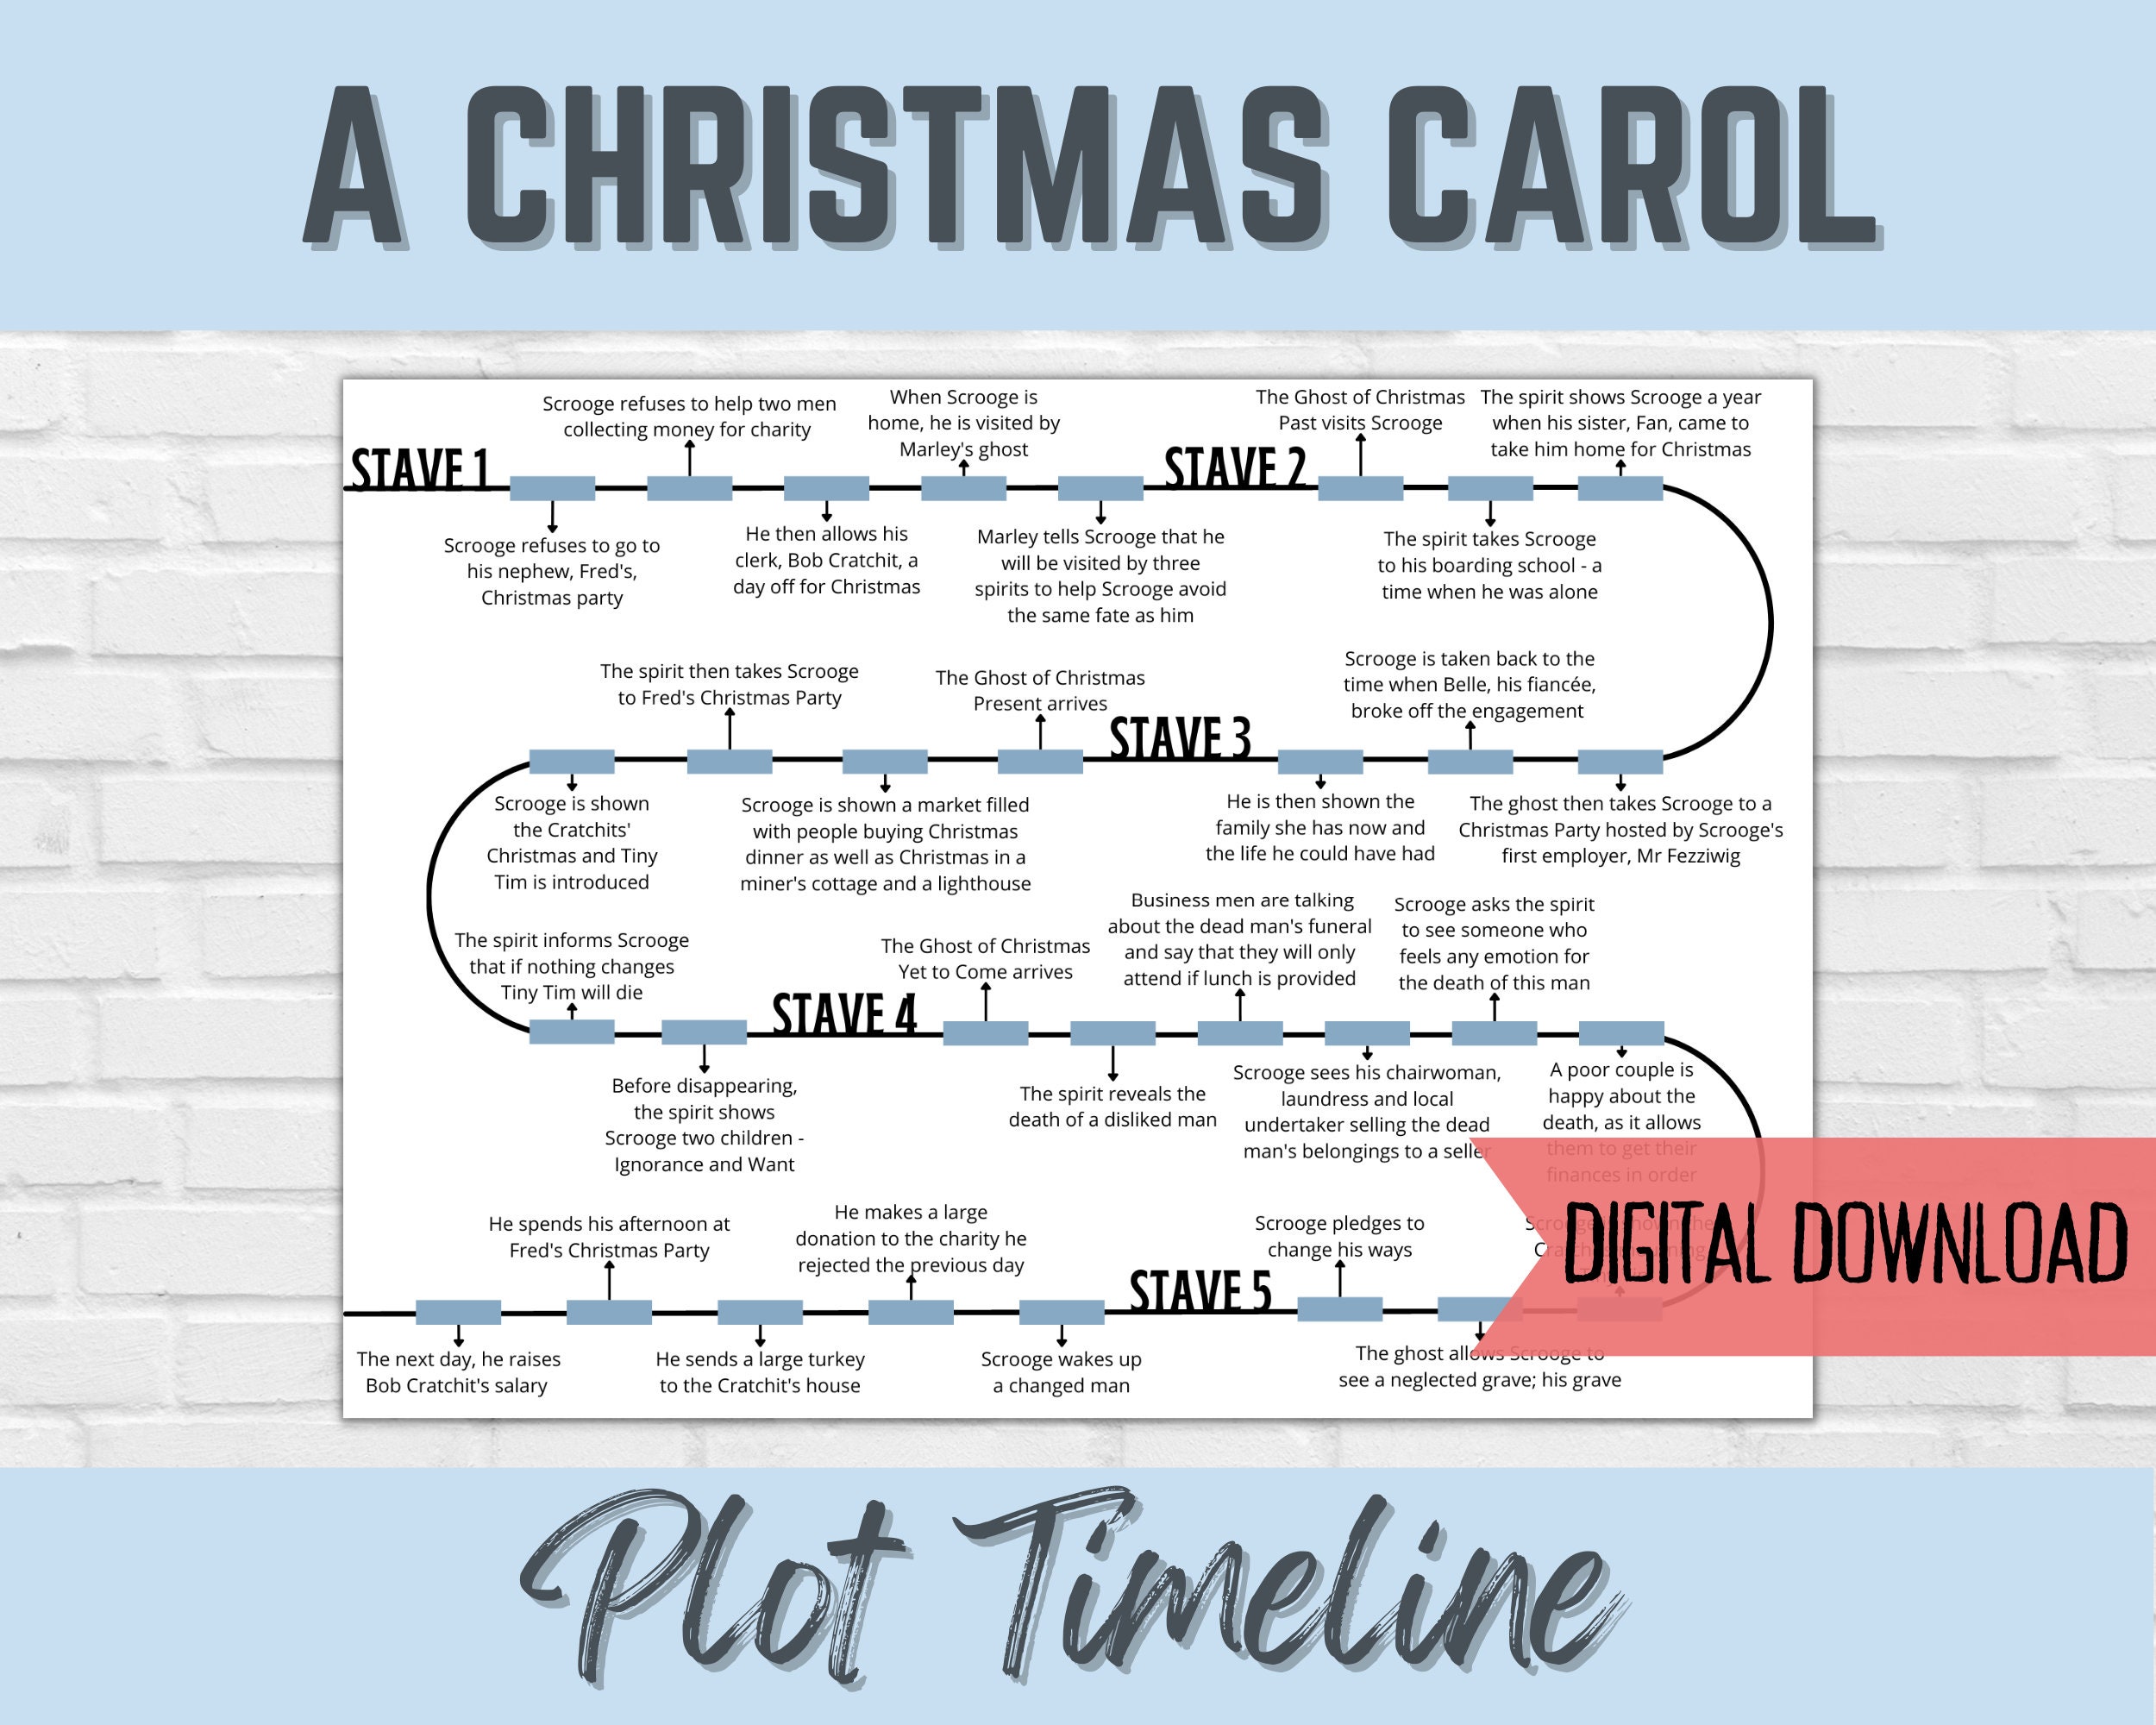 carol's journey plot